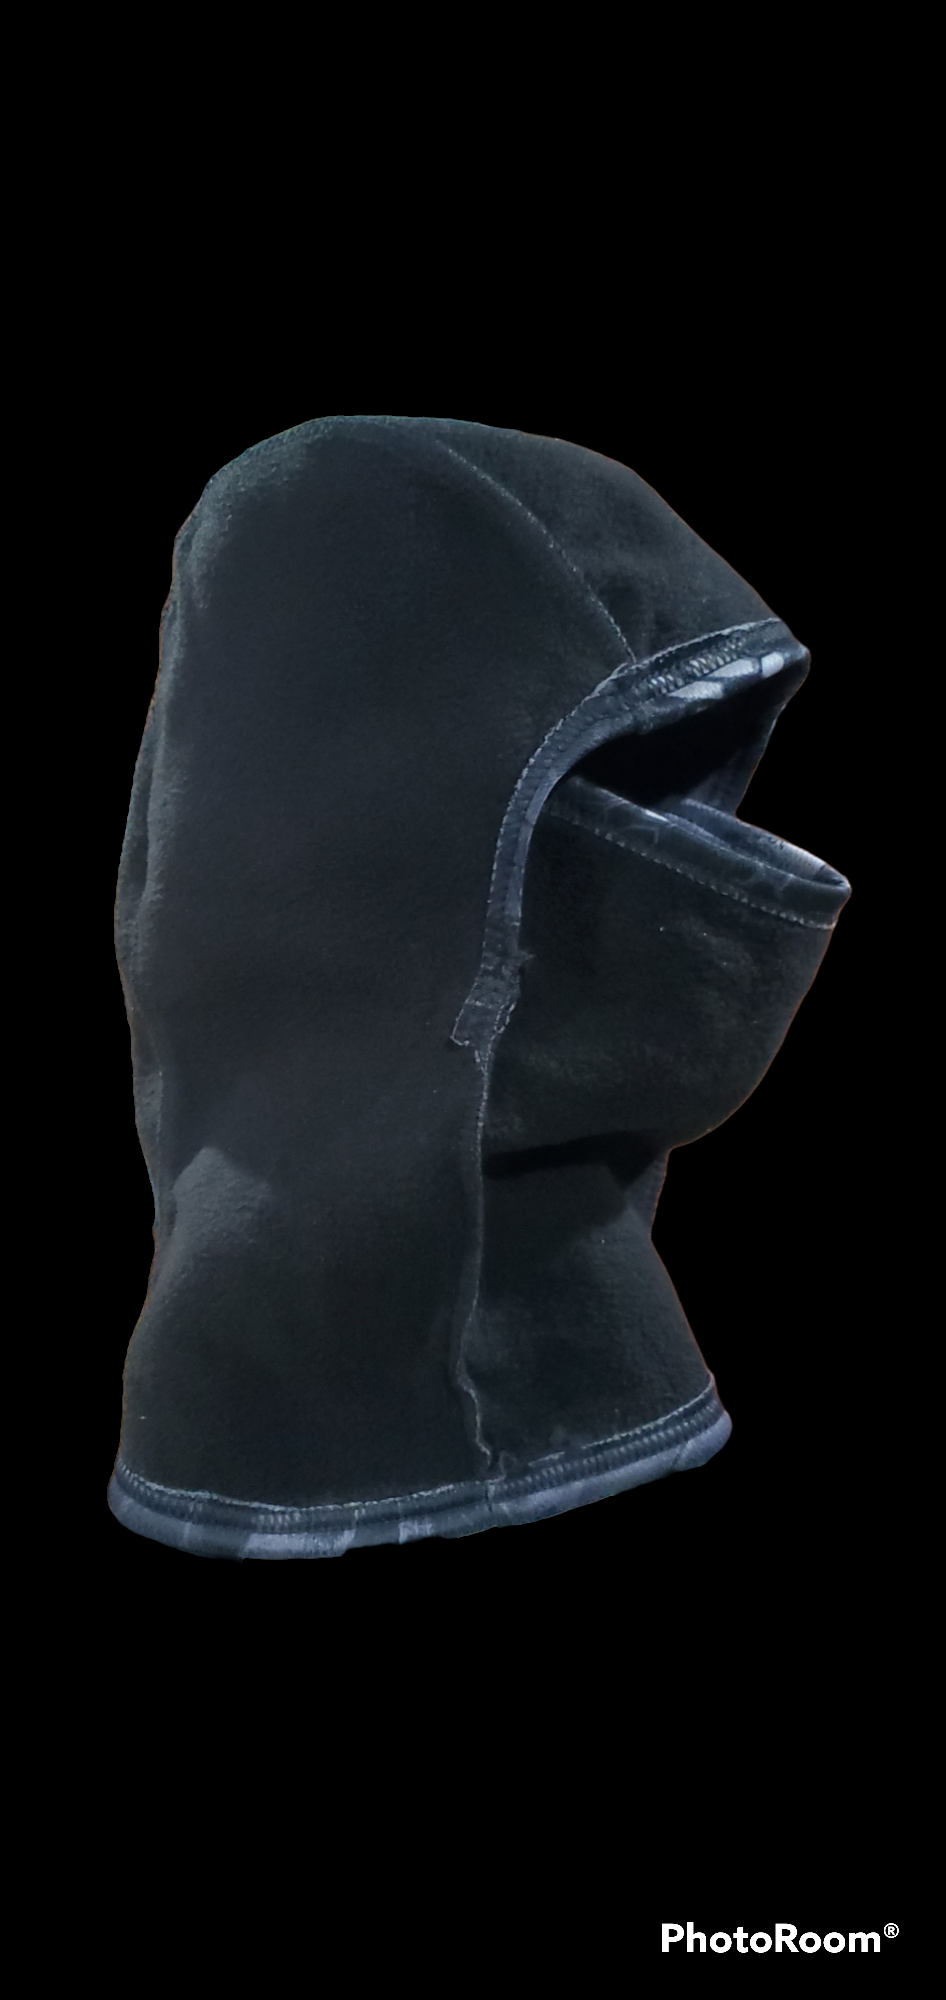 Fleece lined Head mask